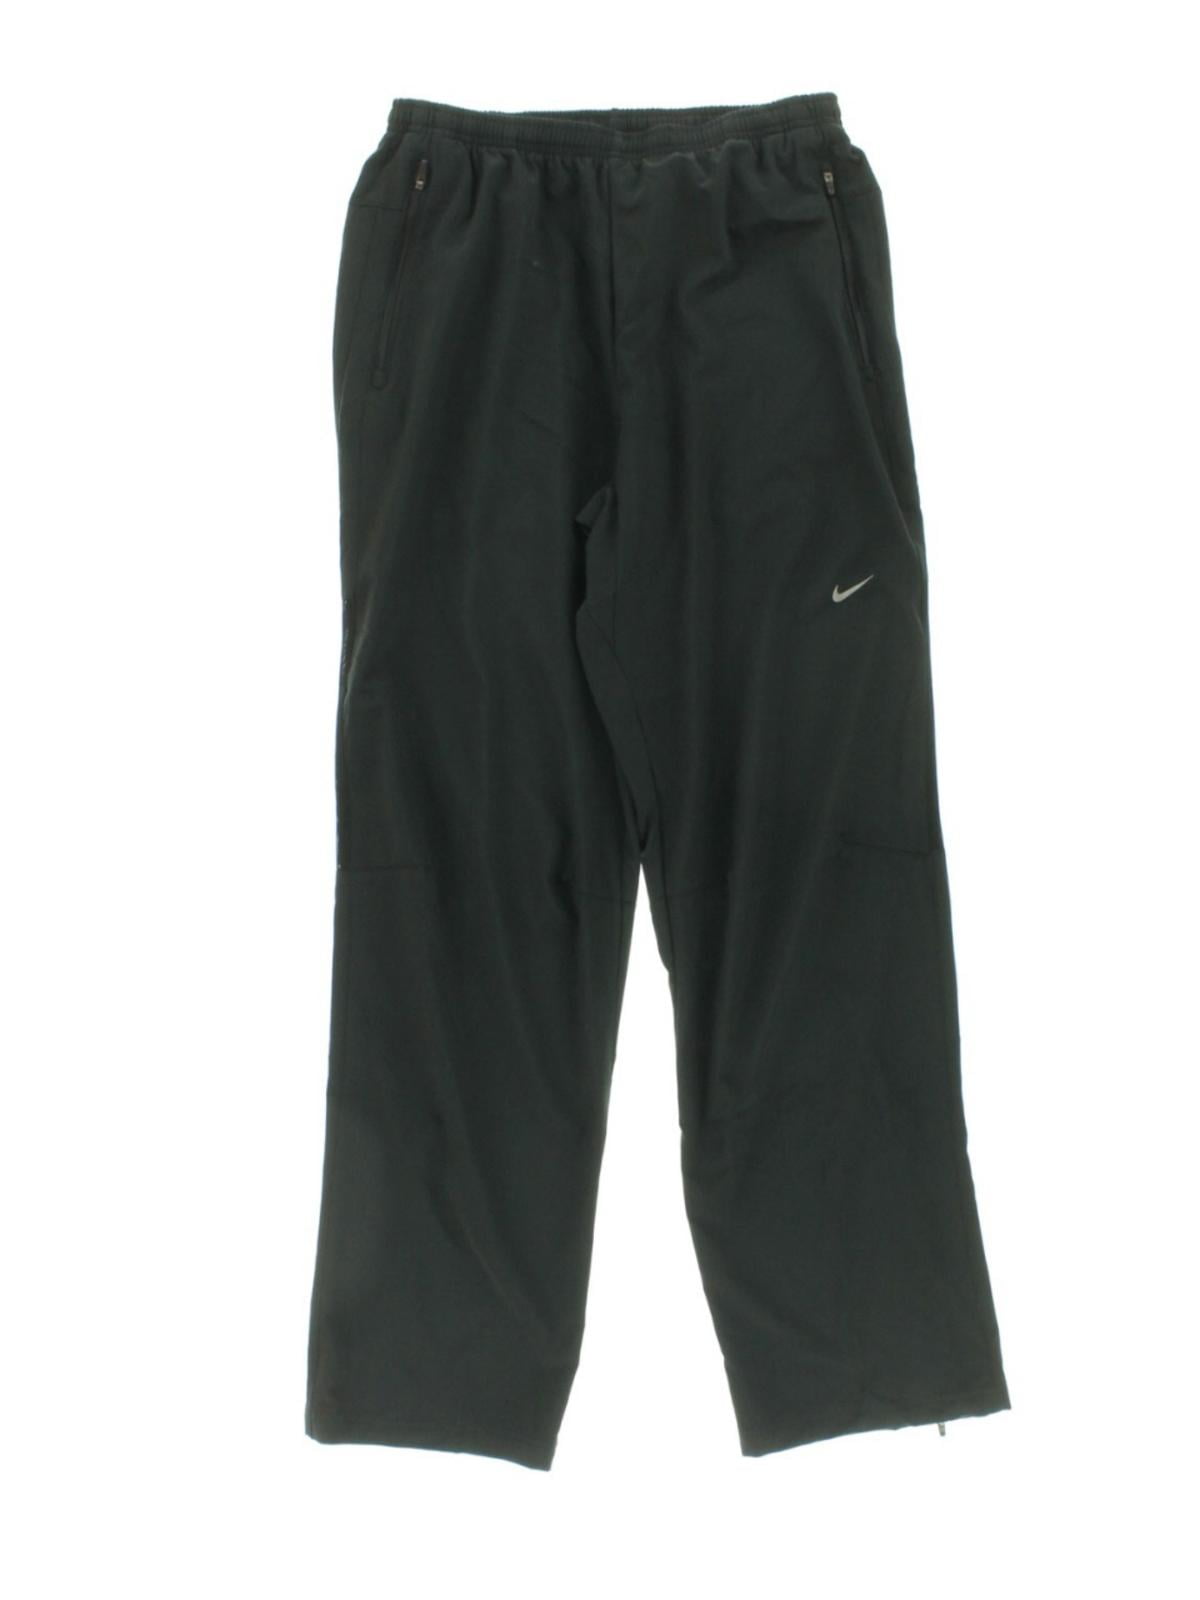 Nike - Nike Mens Reflective Trim Ankle Zip Athletic Pants - Walmart.com ...